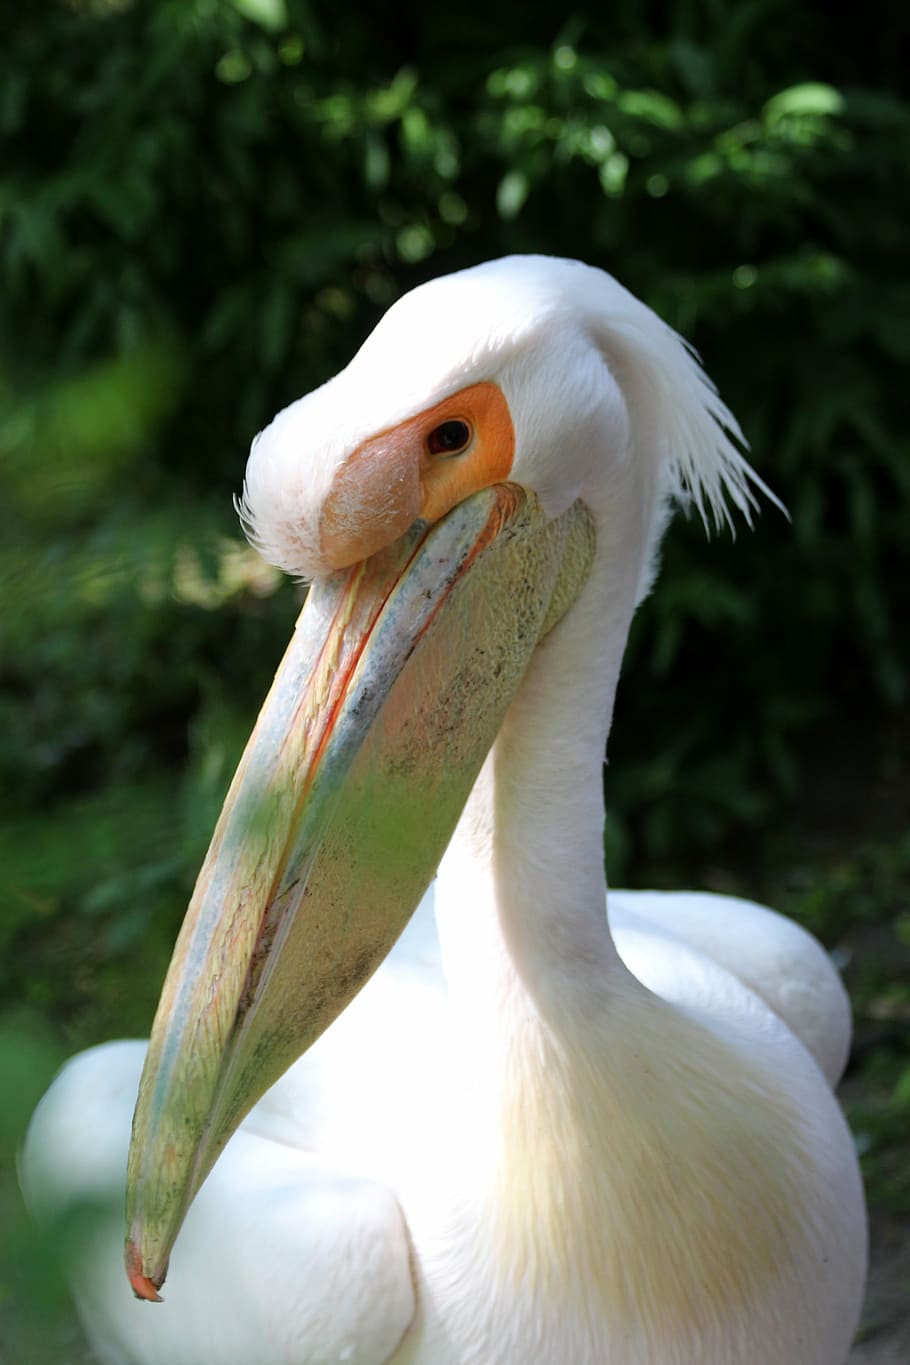 white pelican, bird, pelican, pelecanus onocrotalus, beak, eye, bird's head, animals in the wild, animal themes, animal